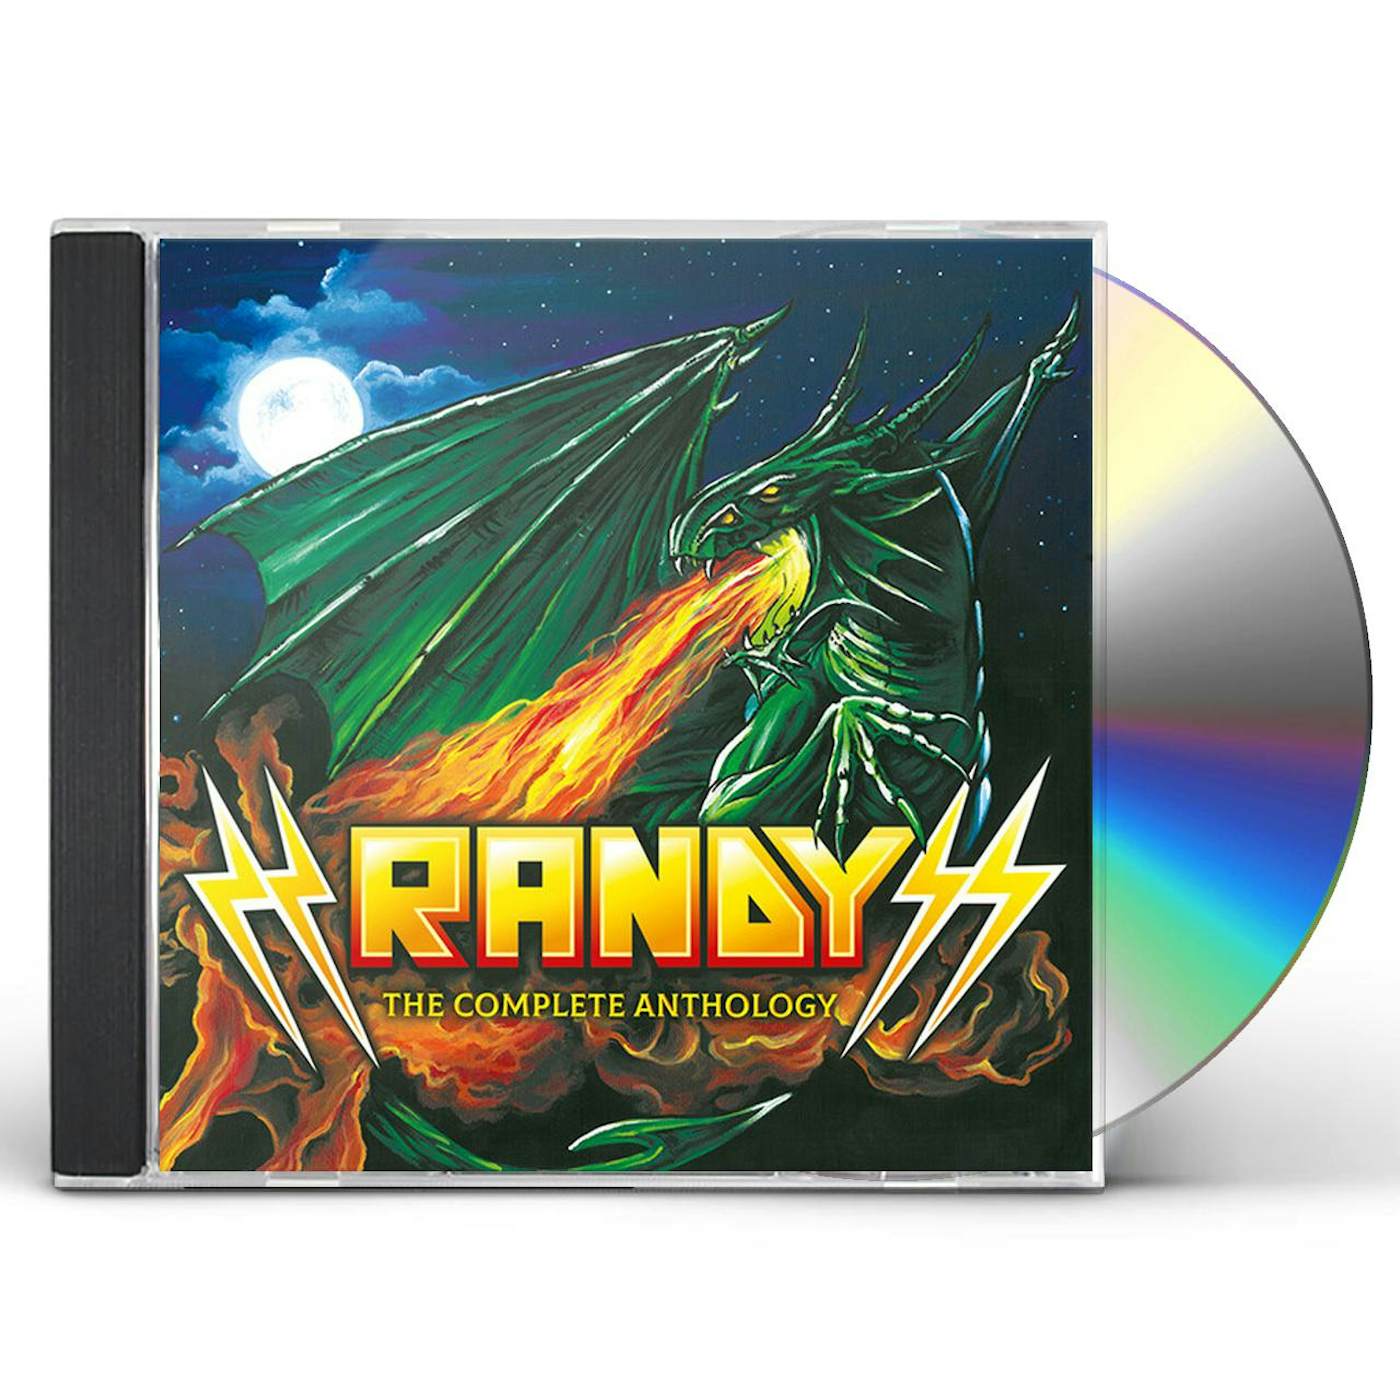 Randy COMPLETE ANTHOLOGY CD